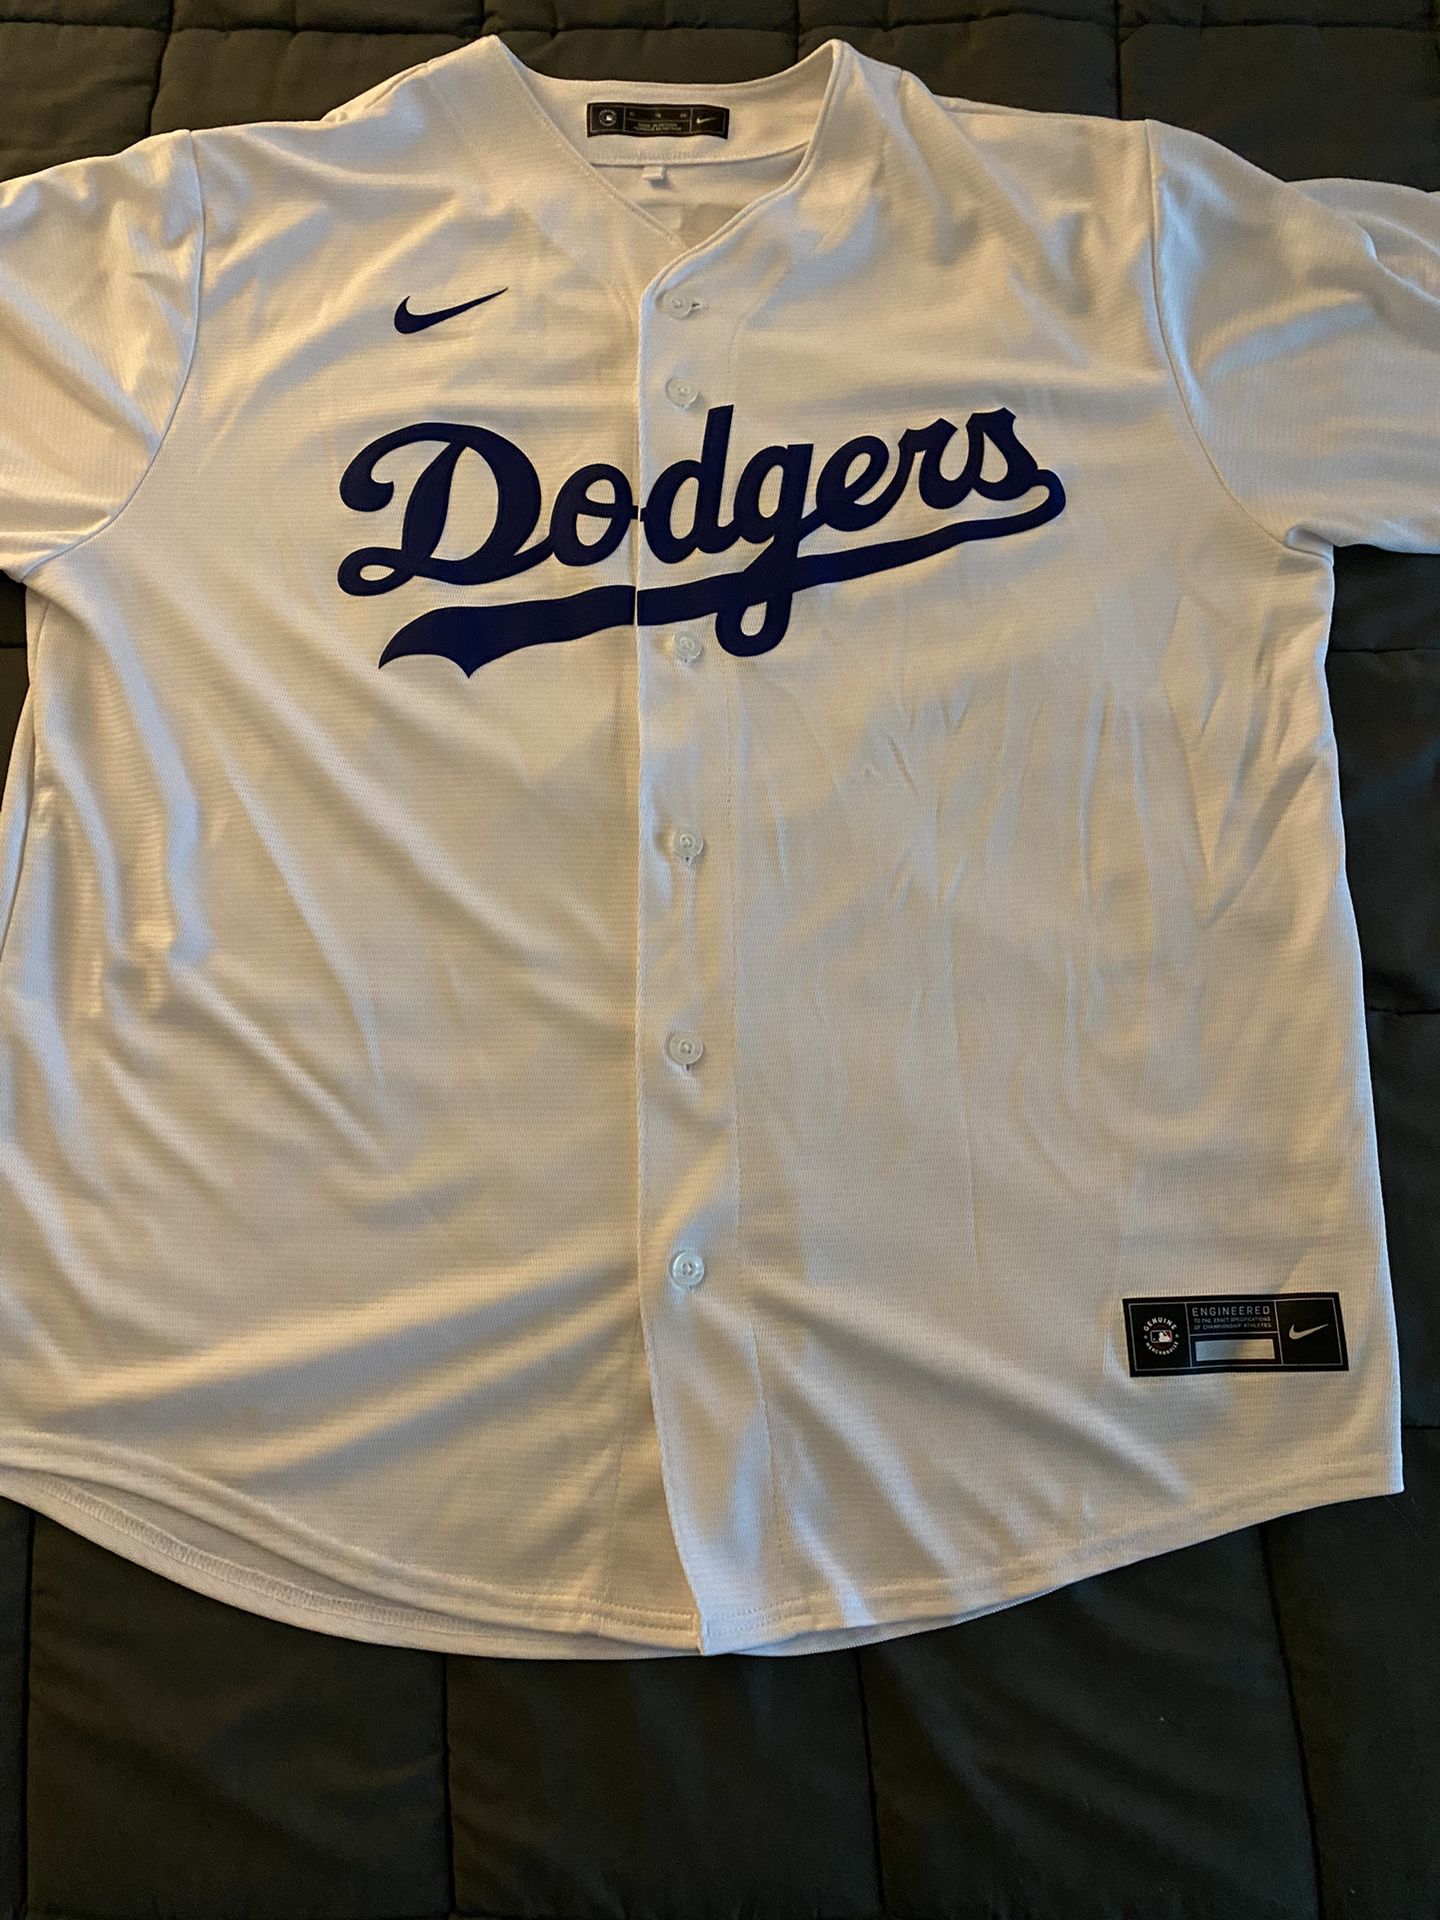 Dodgers jersey 